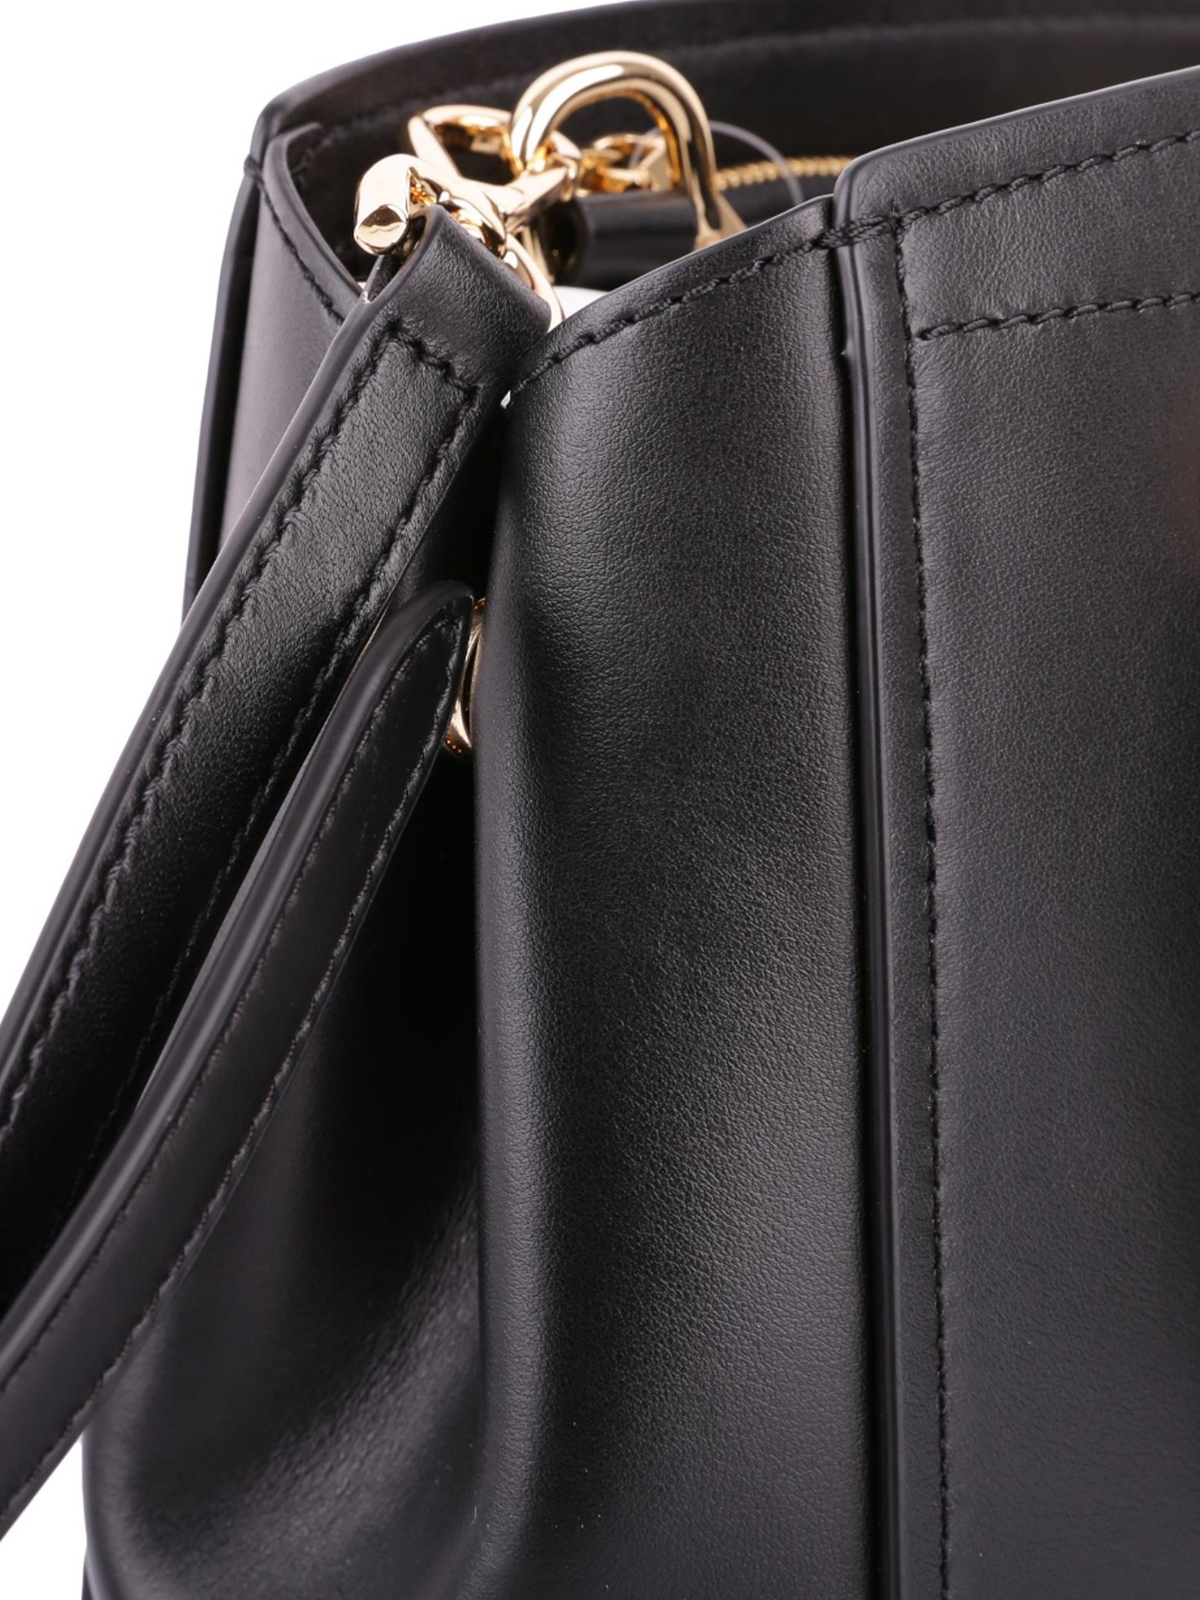 benning leather satchel